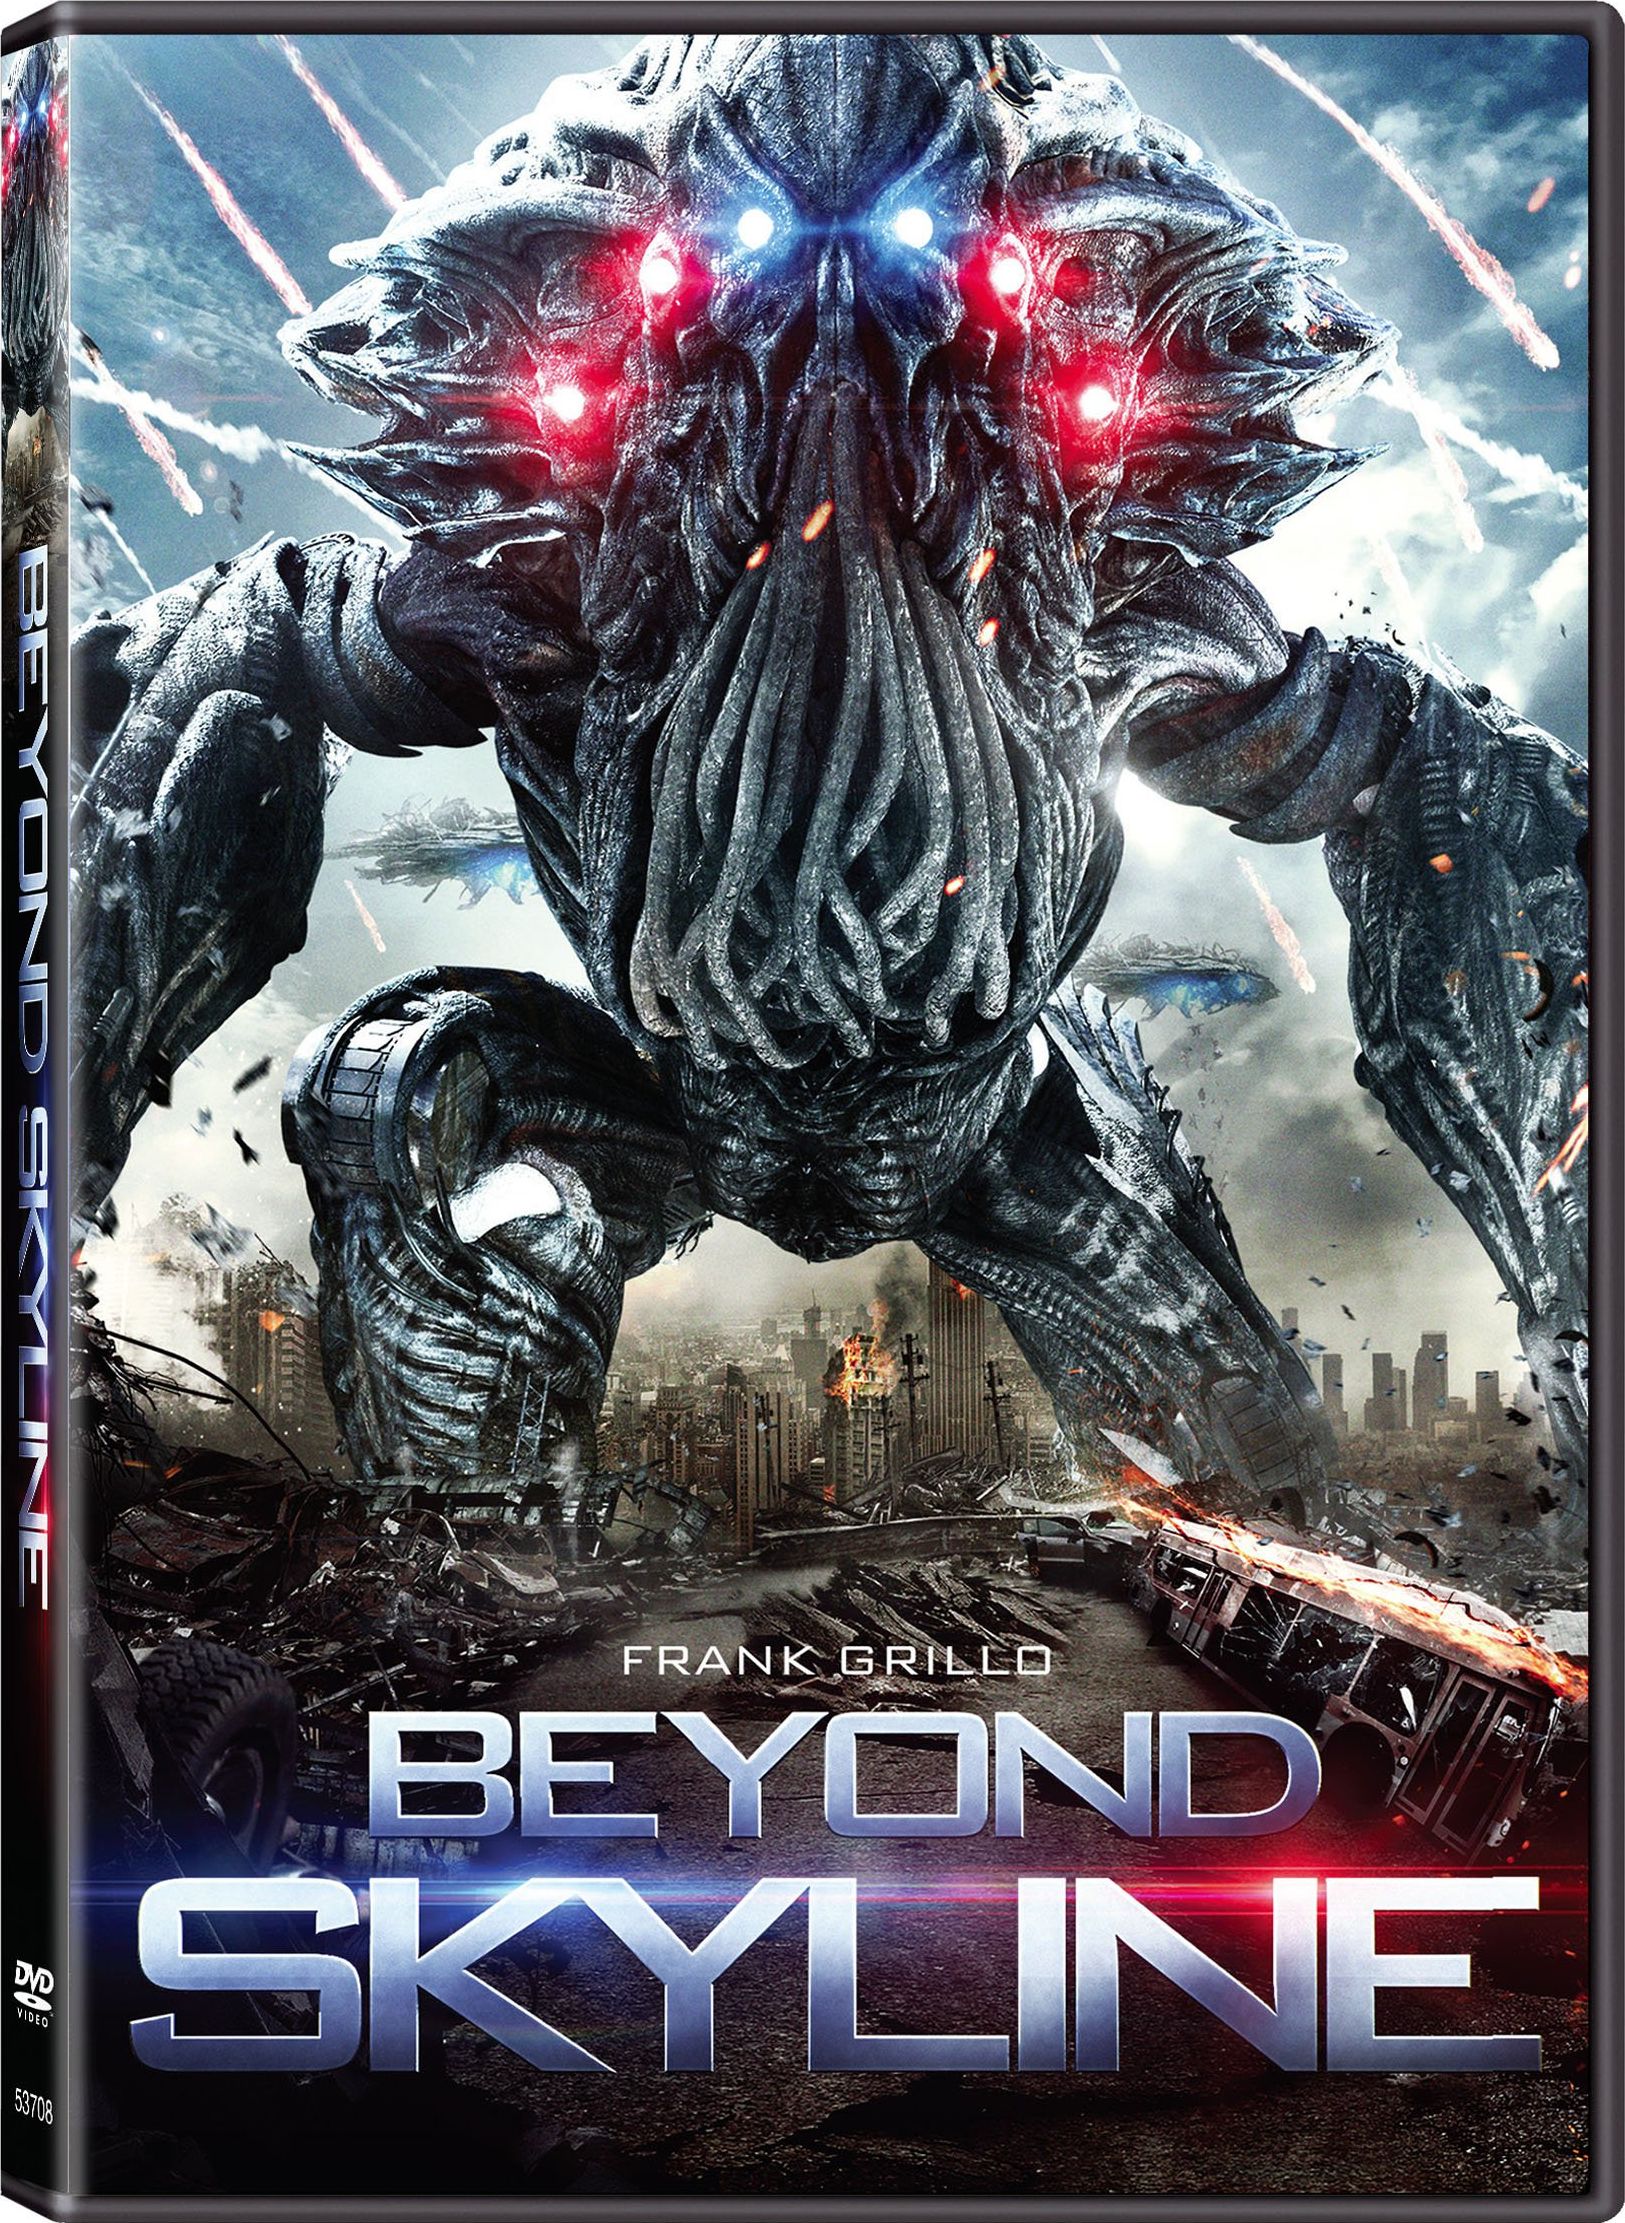 Beyond Skyline DVD Release Date January 16, 2018